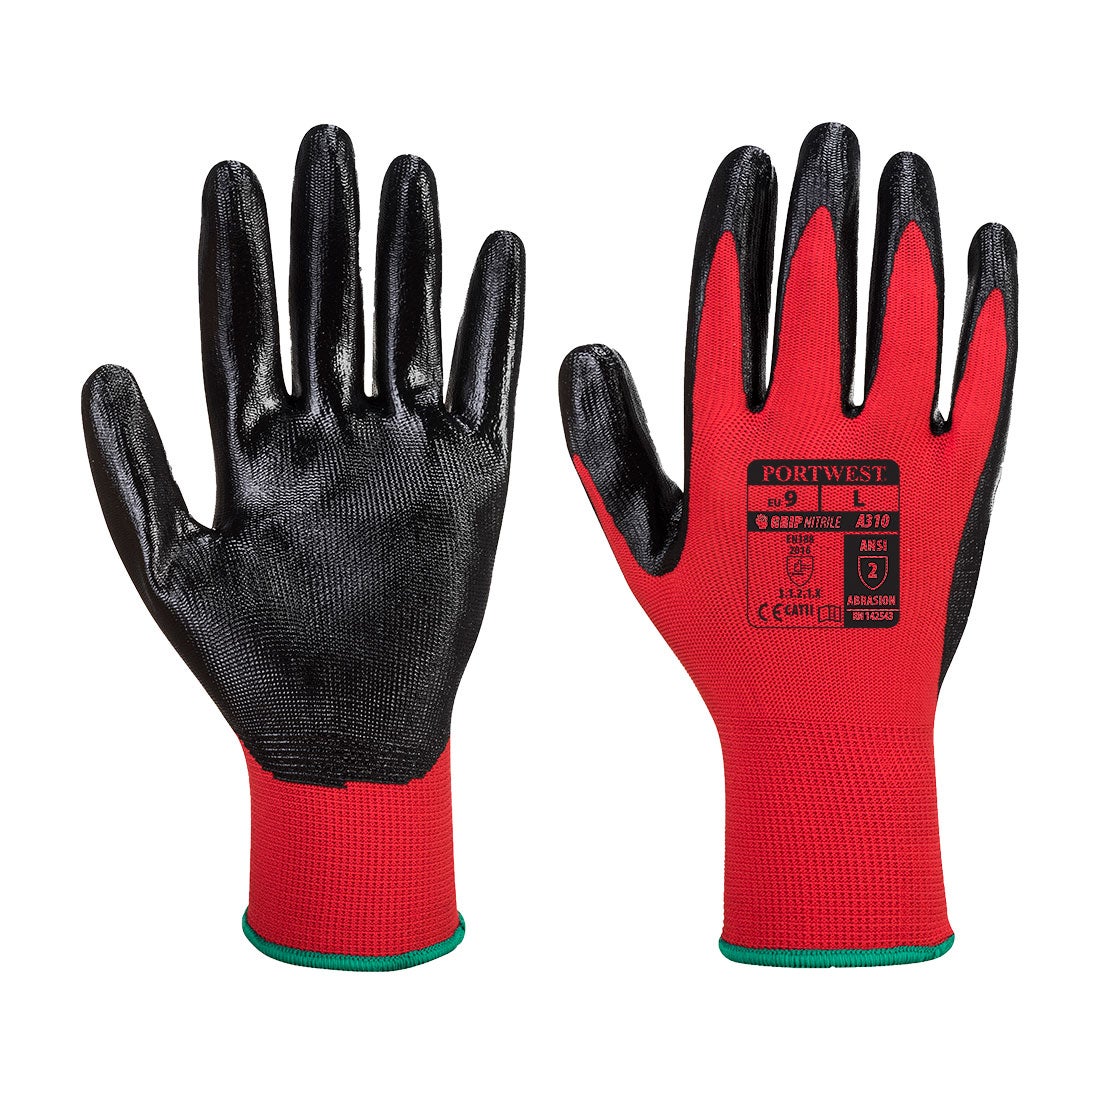 Flexo Grip Nitrile Safety Gloves Red/Black 12 Pairs